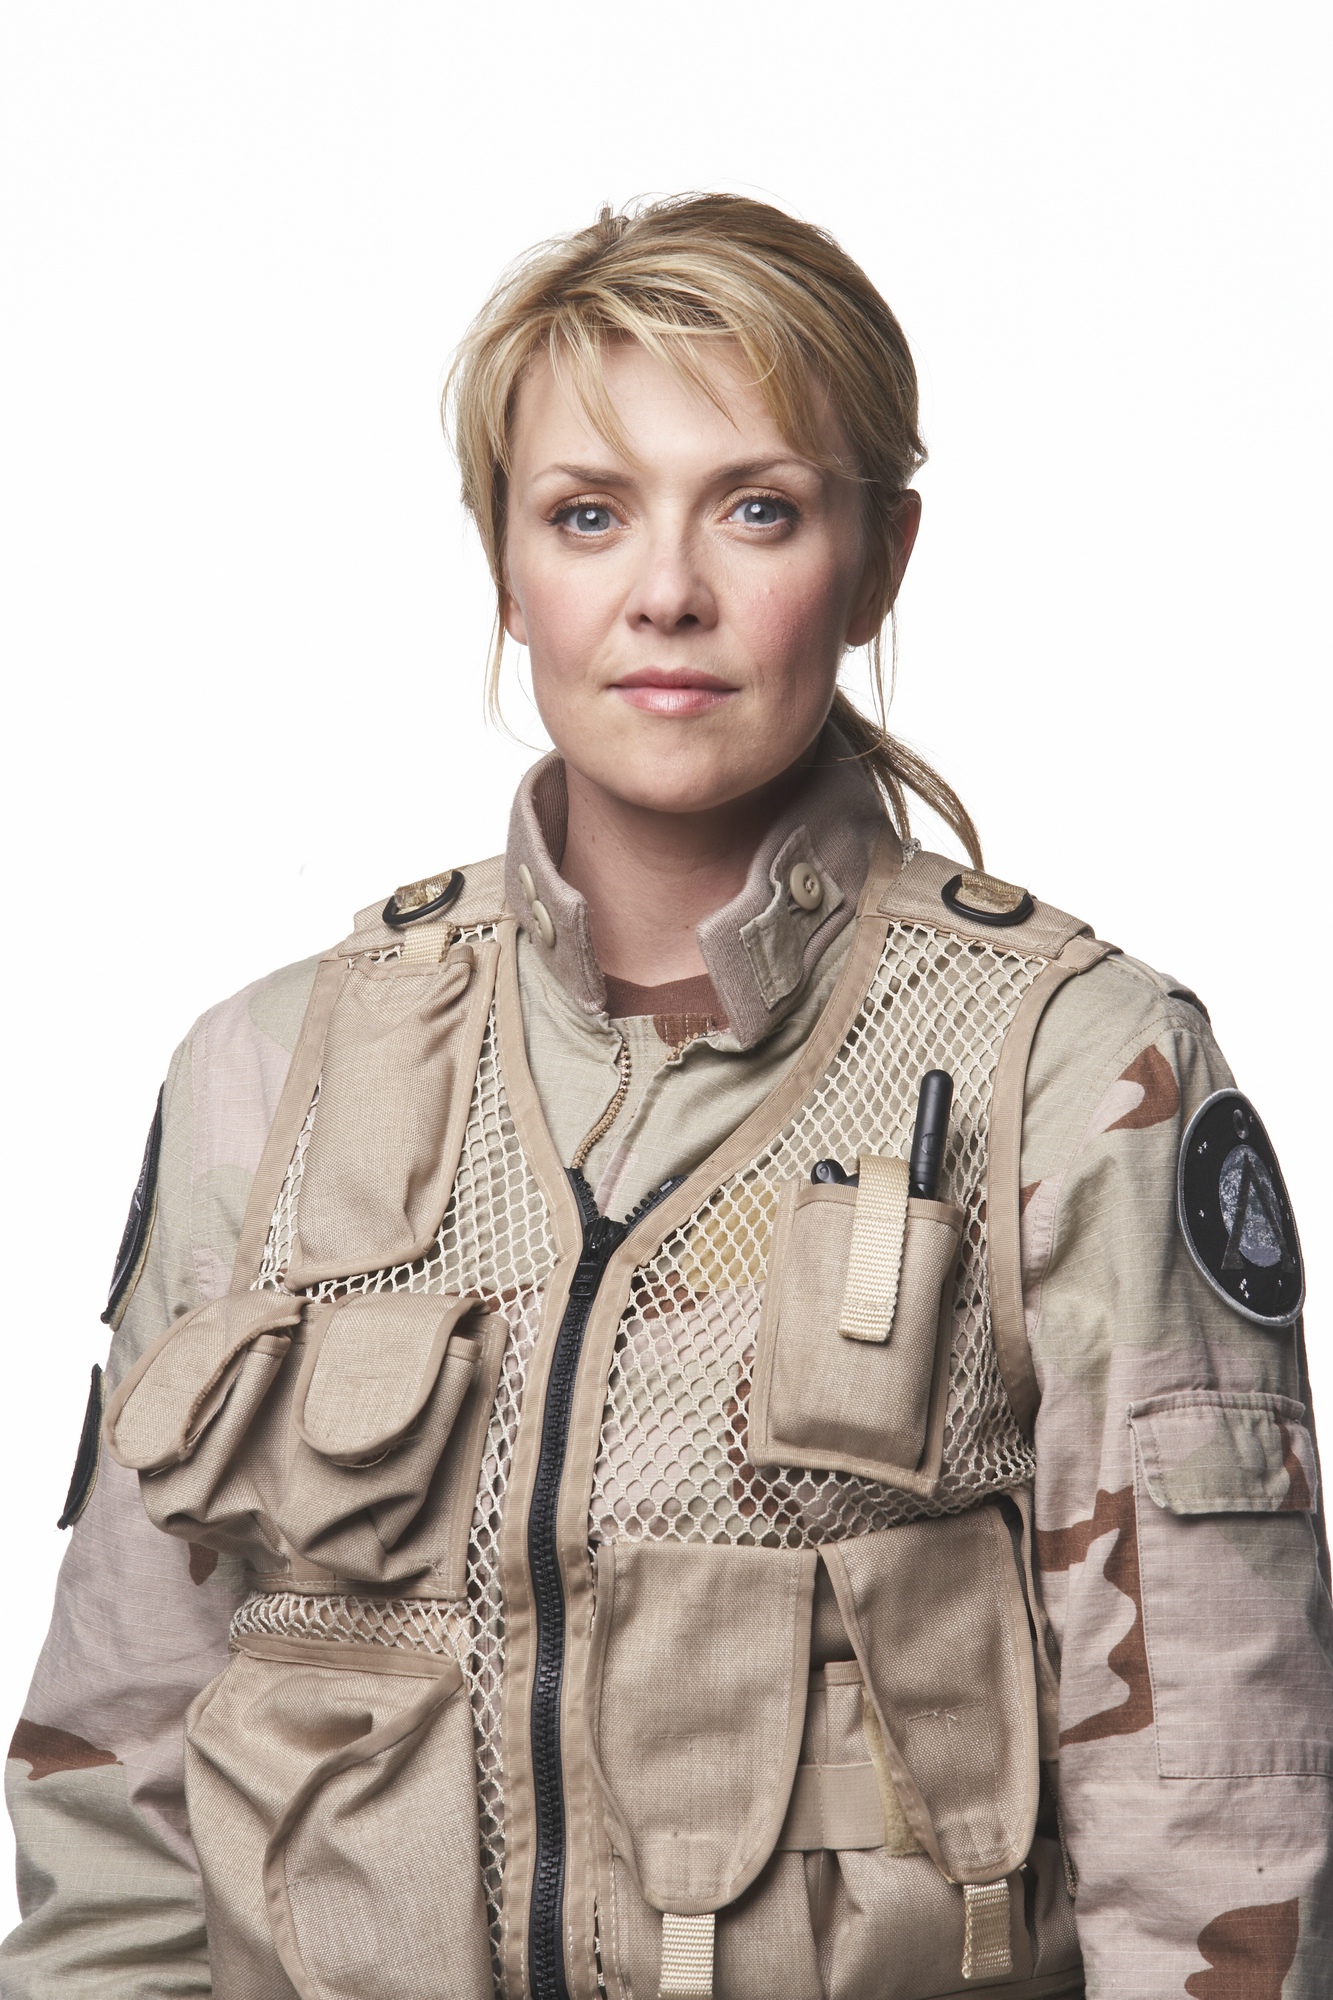 Stargate SG-1 Amanda Tapping as Samantha Carter in Green 